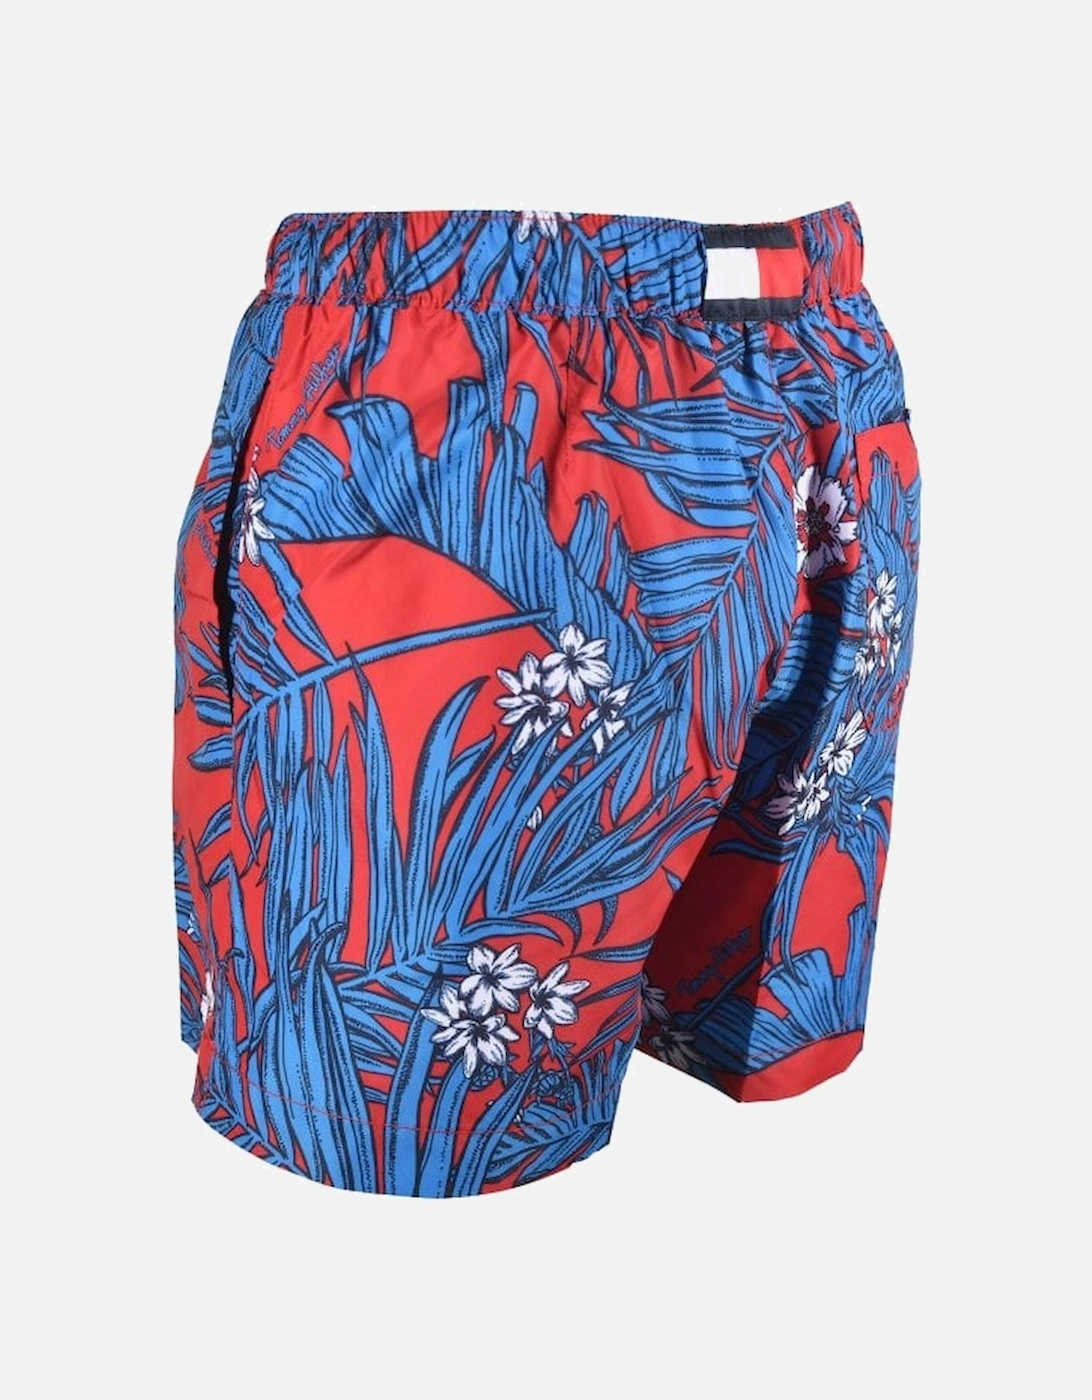 Tropical Swim Shorts, Red/blue